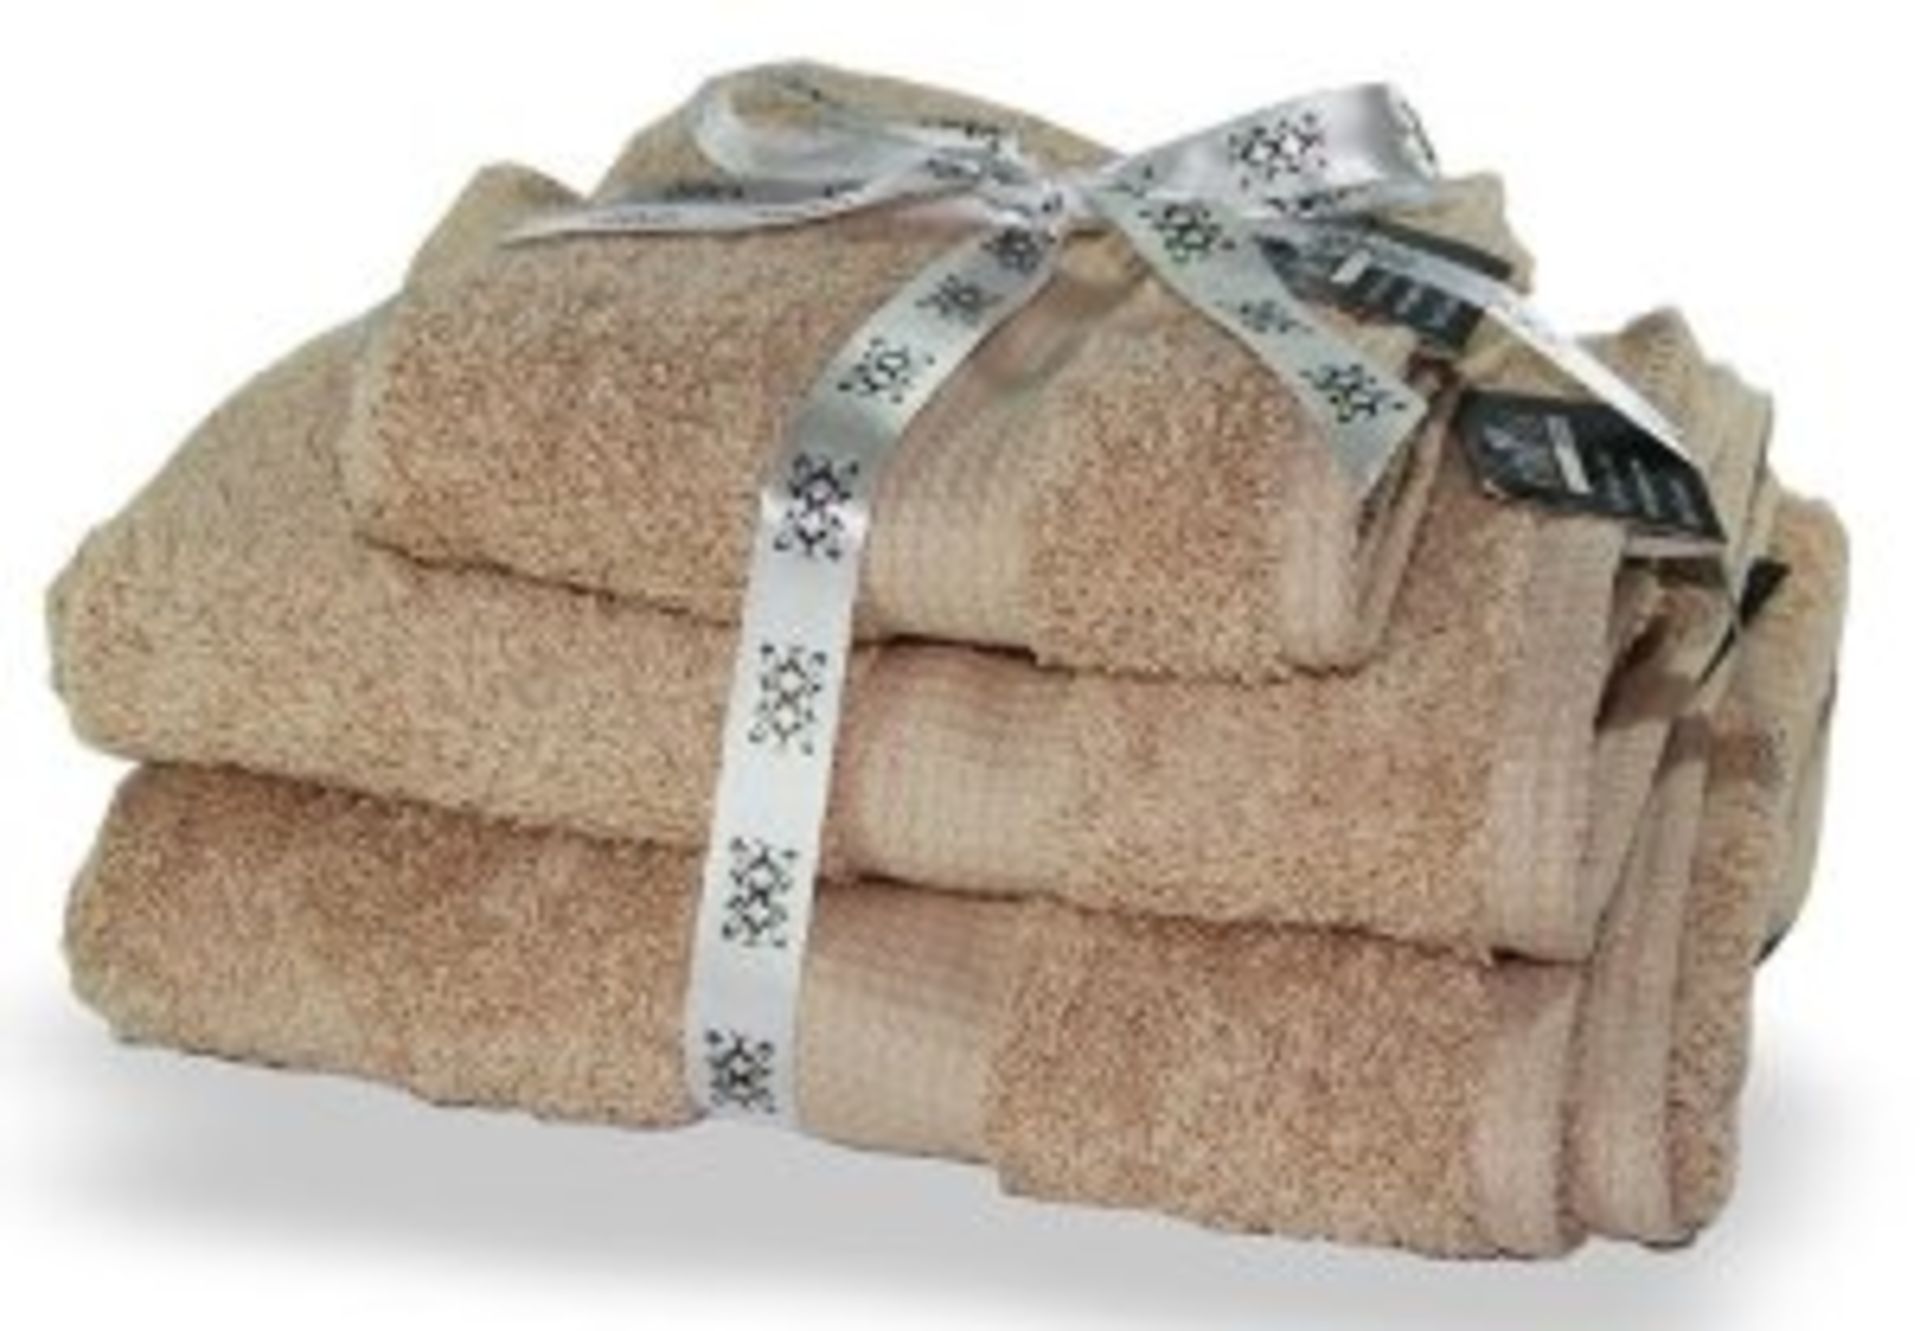 V Brand New Six Piece Latte Towel Bale Set Includes 2 Bath Towels 2 Hand Towels 2 Face Towels - Image 3 of 3